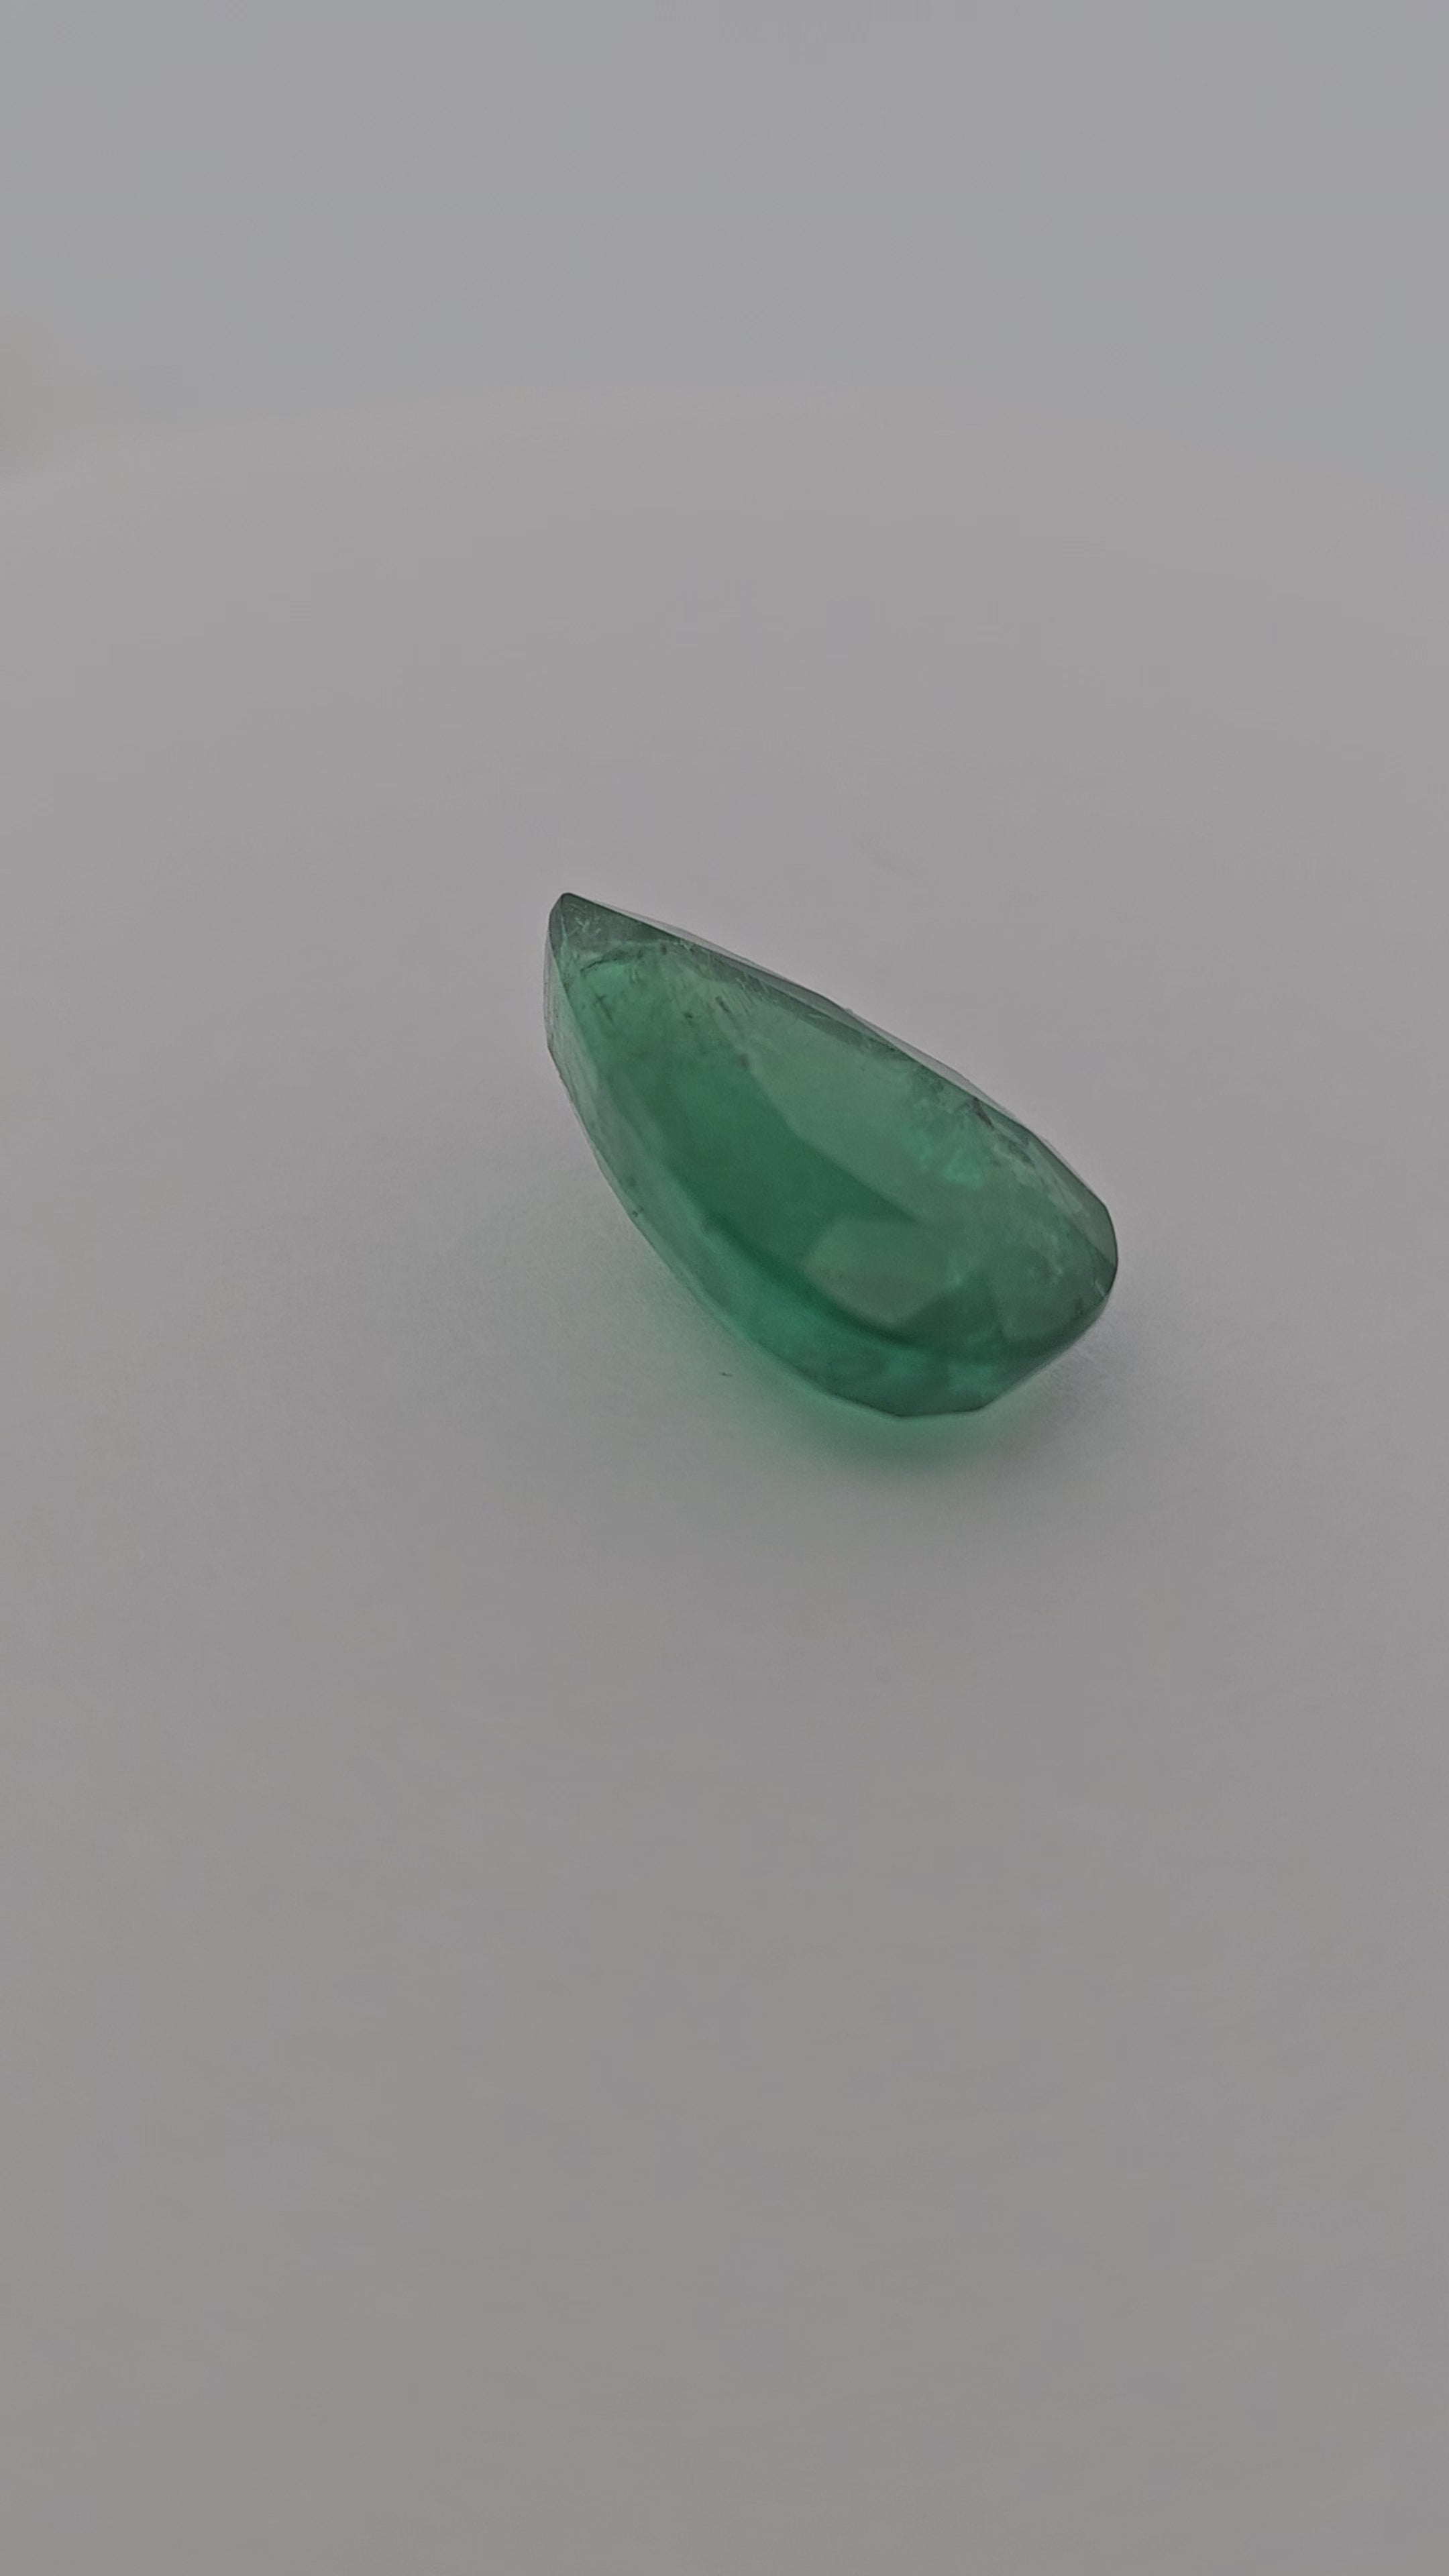 for sale Natural Zambian Emerald Stone 8.13 Carats Pear Cut 17.51 x 10.73 x 6.81 mm